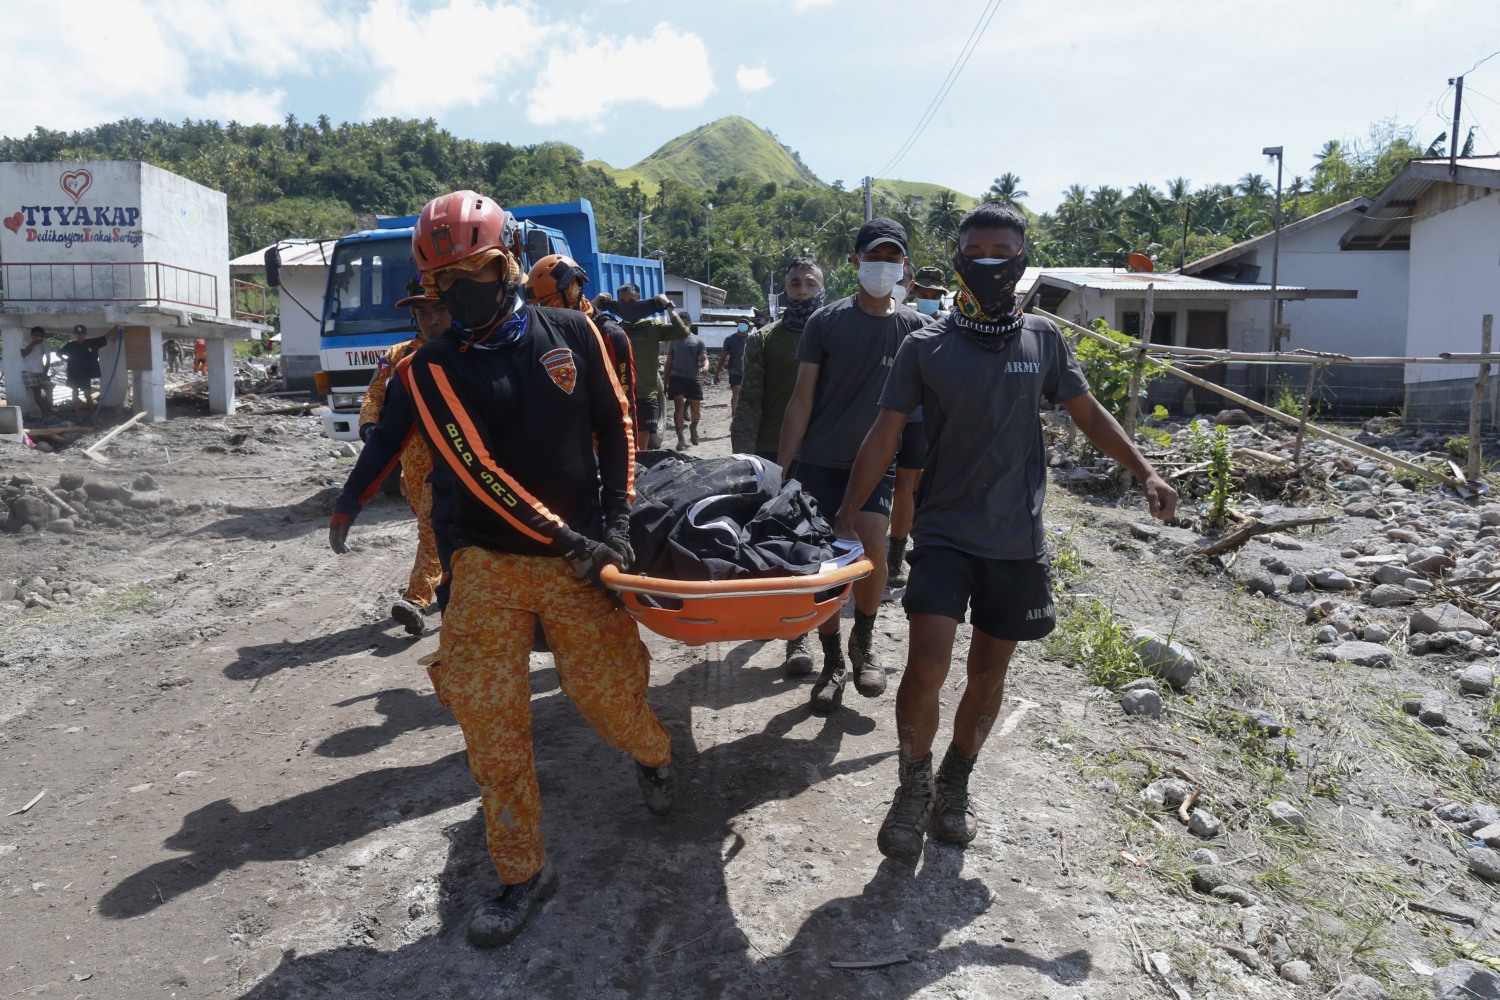 Philippine storm victims feared tsunami, ran toward mudslide